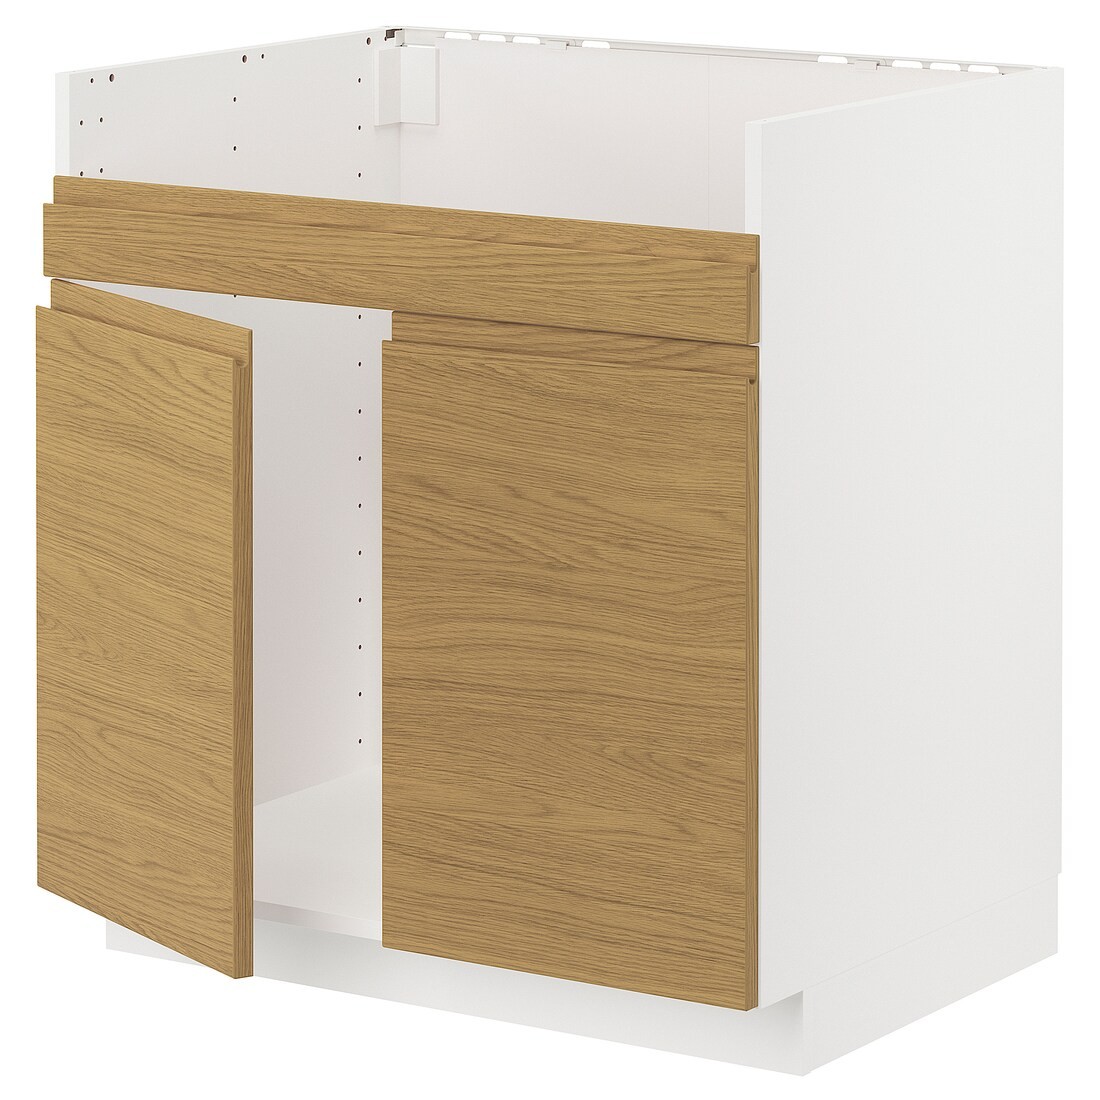 IKEA METOD шкаф д/двойной мойки ХАВСЕН, белый / Voxtorp имитация дуб, 80x60 см 79538111 | 795.381.11